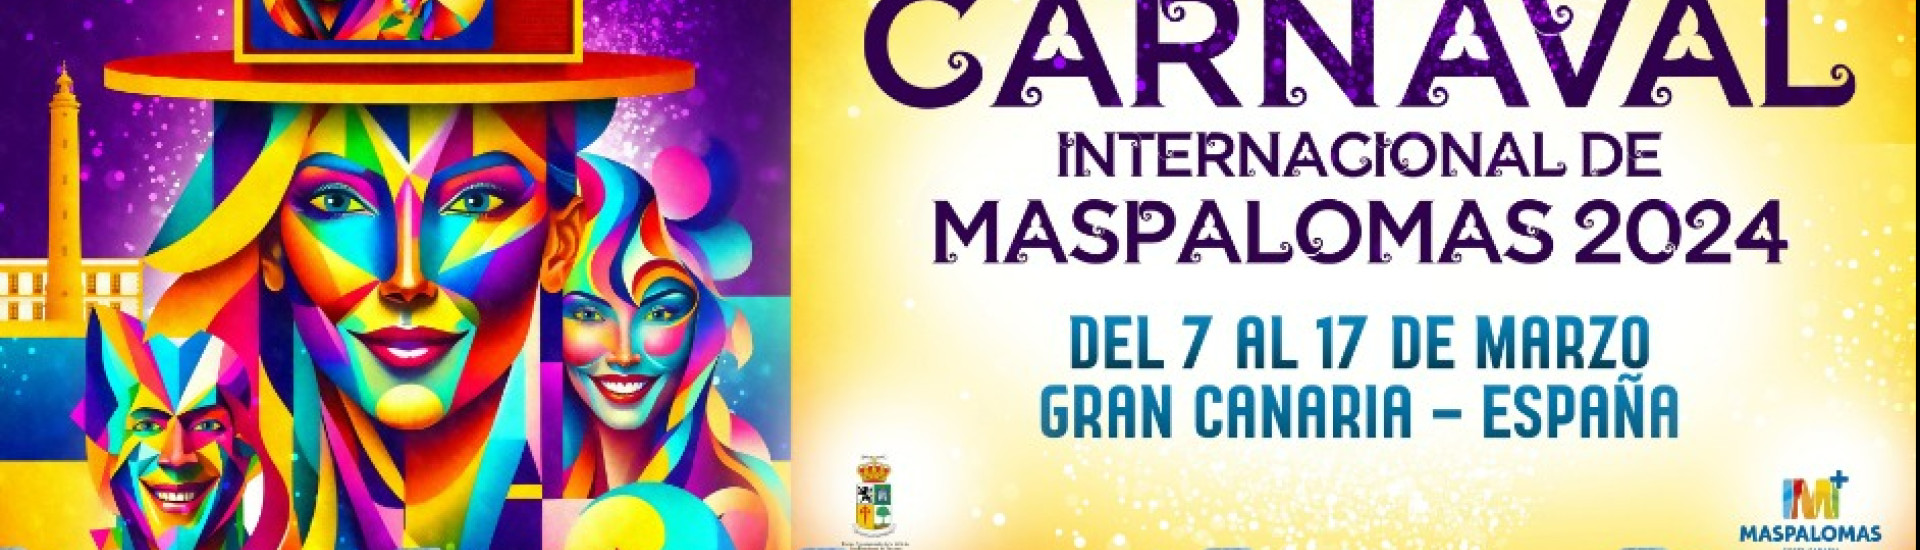 Carnaval international de Maspalomas 2024